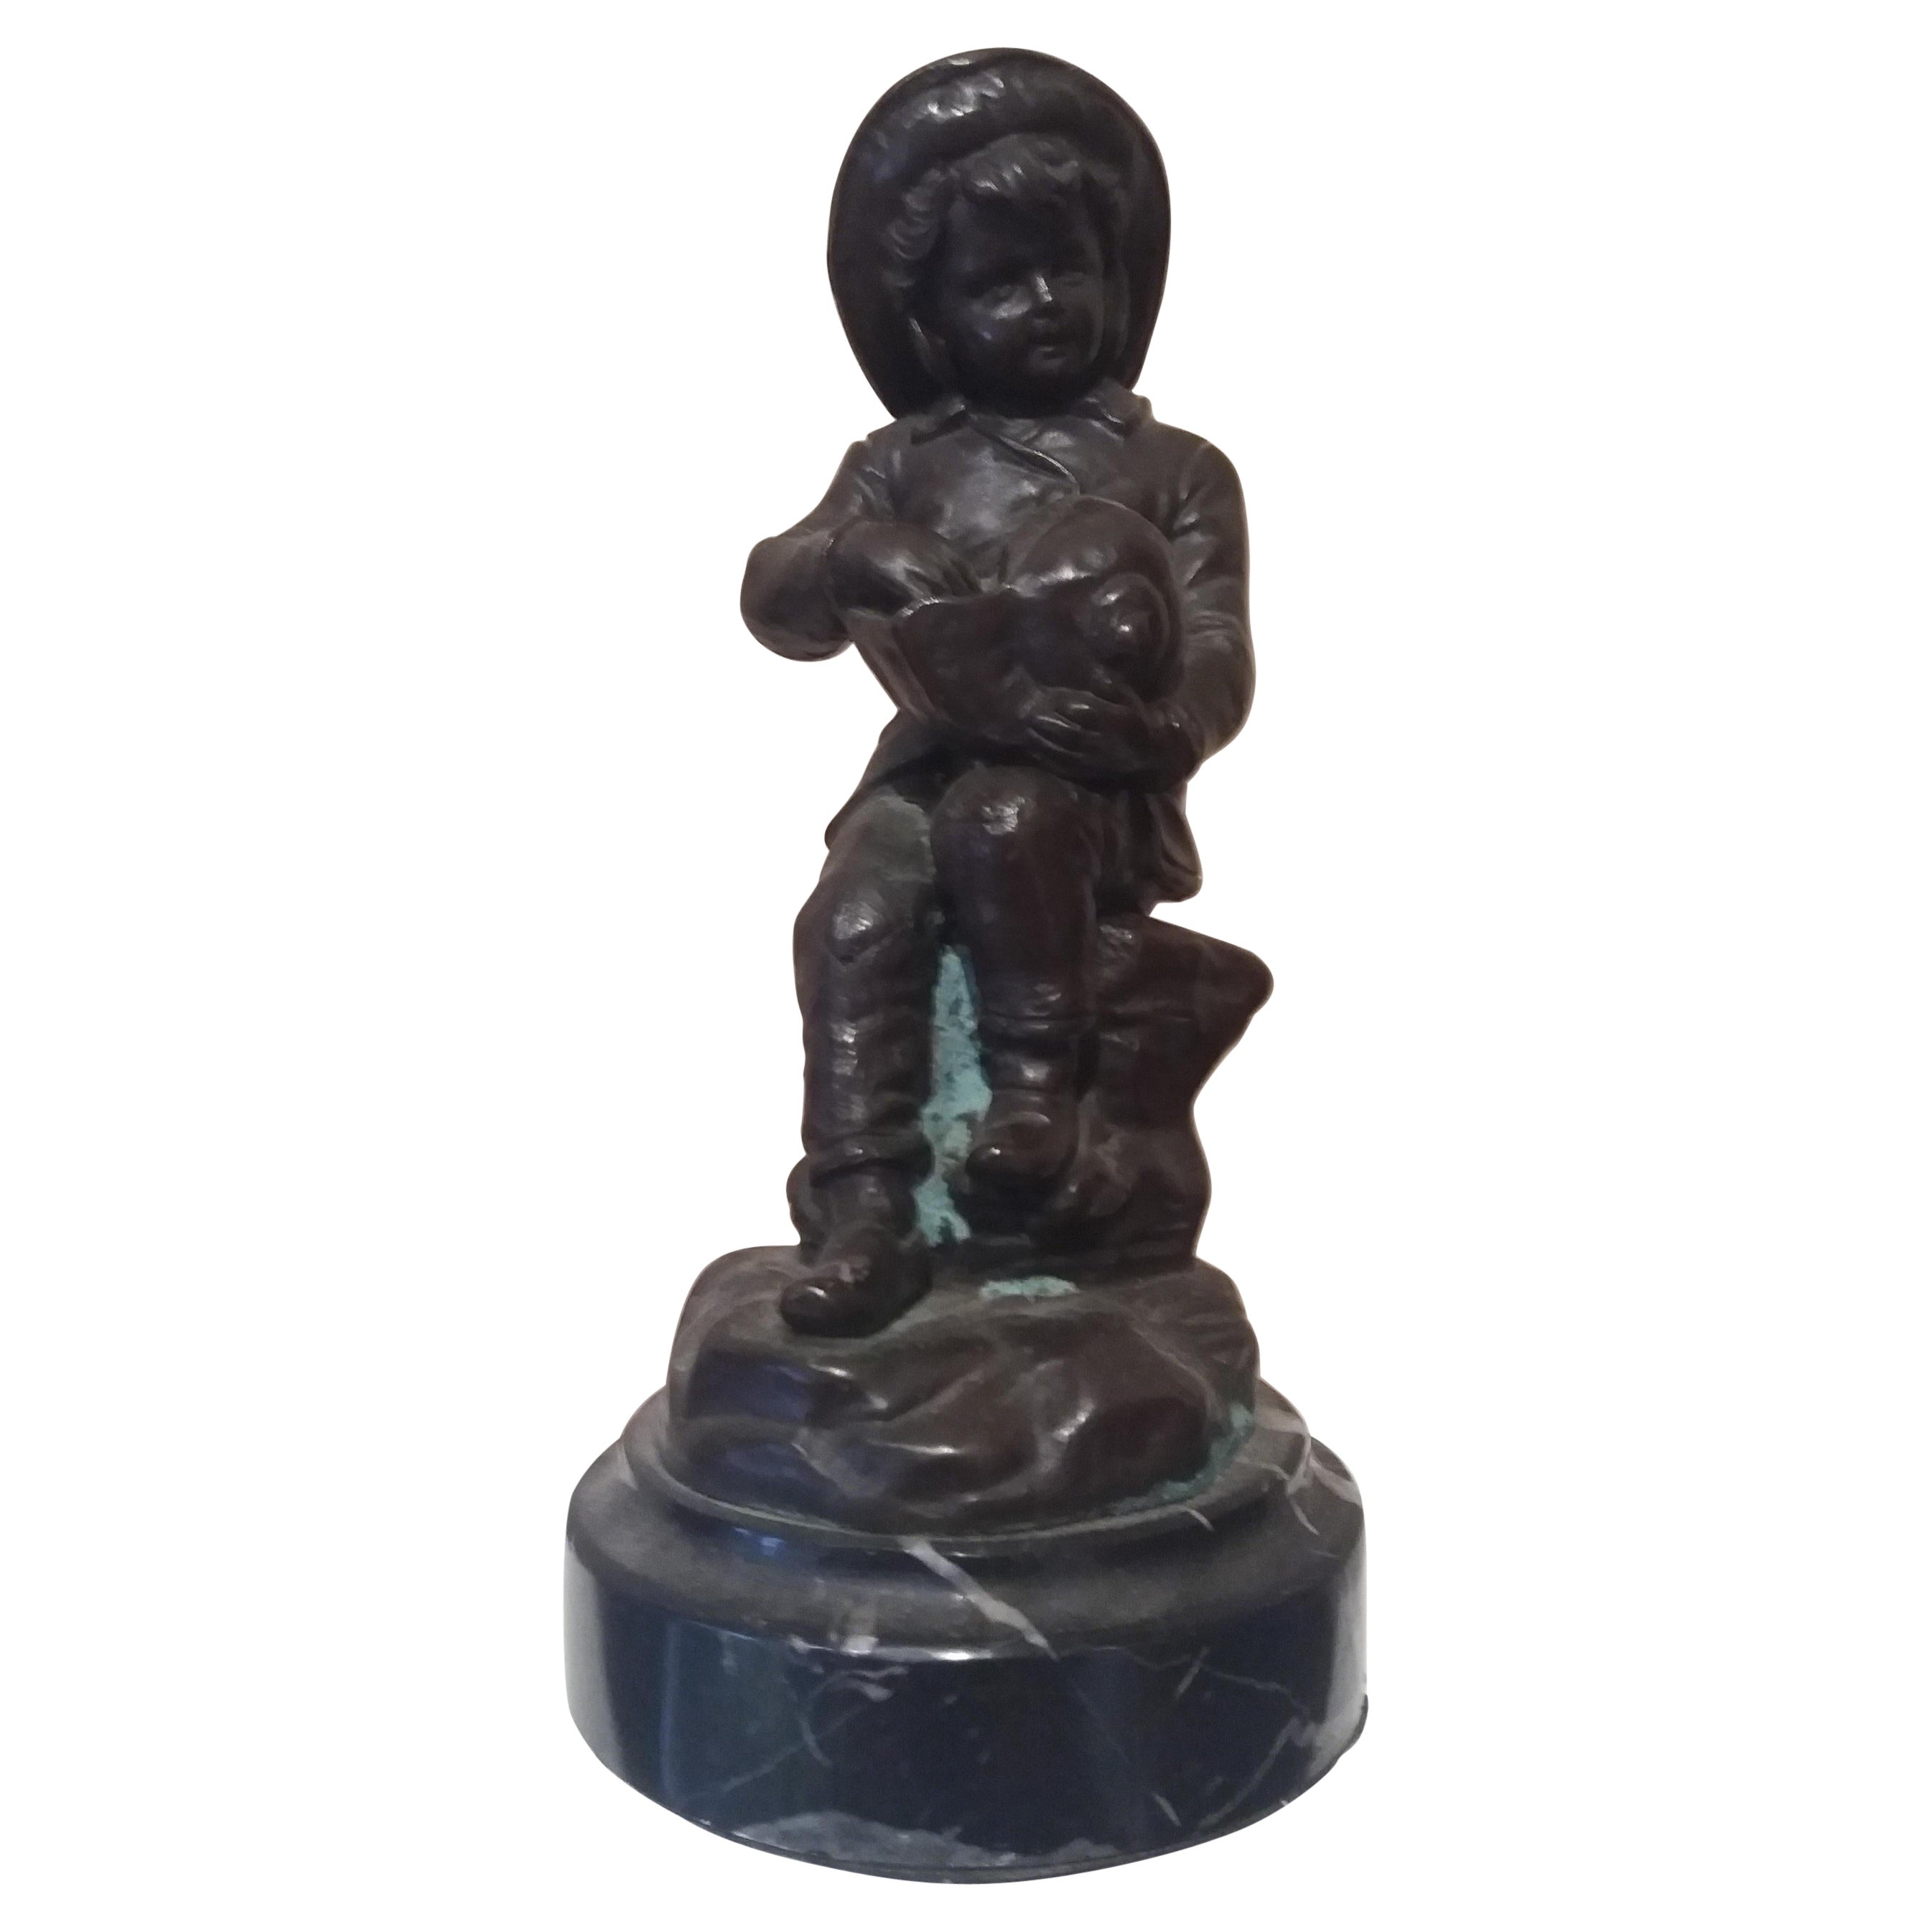 BOLLEL Figurative Sculpture -  Bollel 23  Child and conch shell. Original multiple bronze sculpture